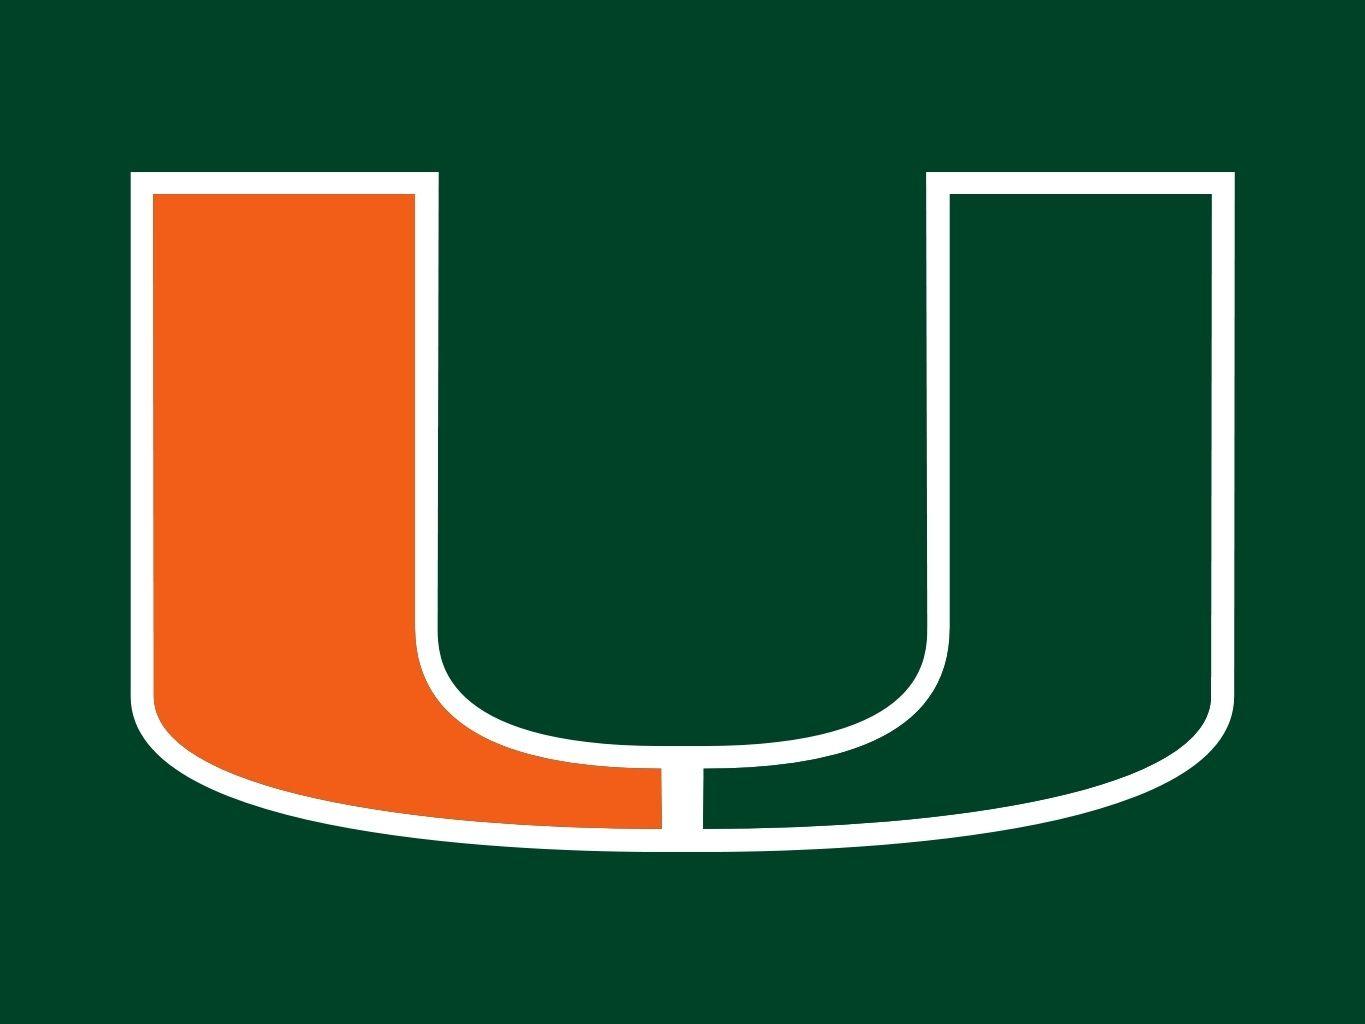 University of Miami Hurricanes Logo - University of Miami Hurricanes. Go Canes. Miami hurricanes, Miami